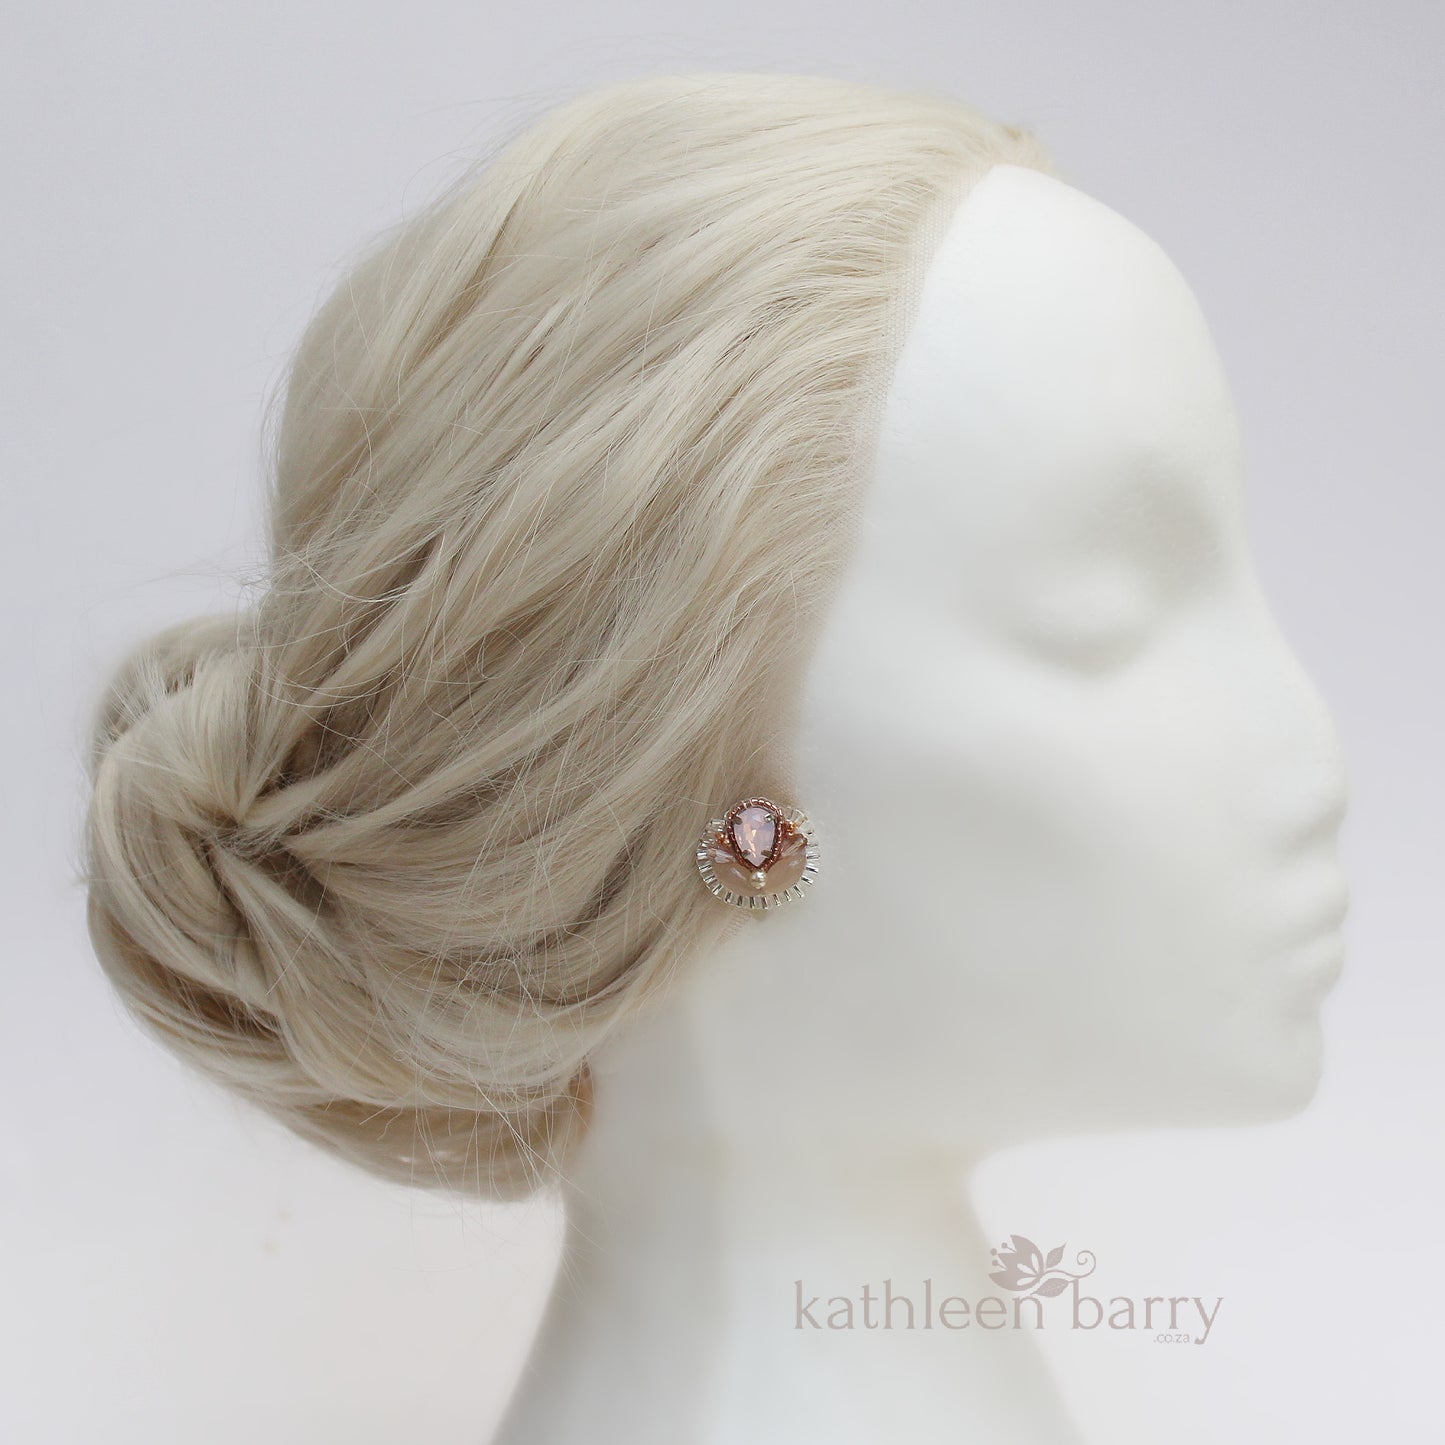 stud earrings pink opal rose gold statement wedding bridal jewellery